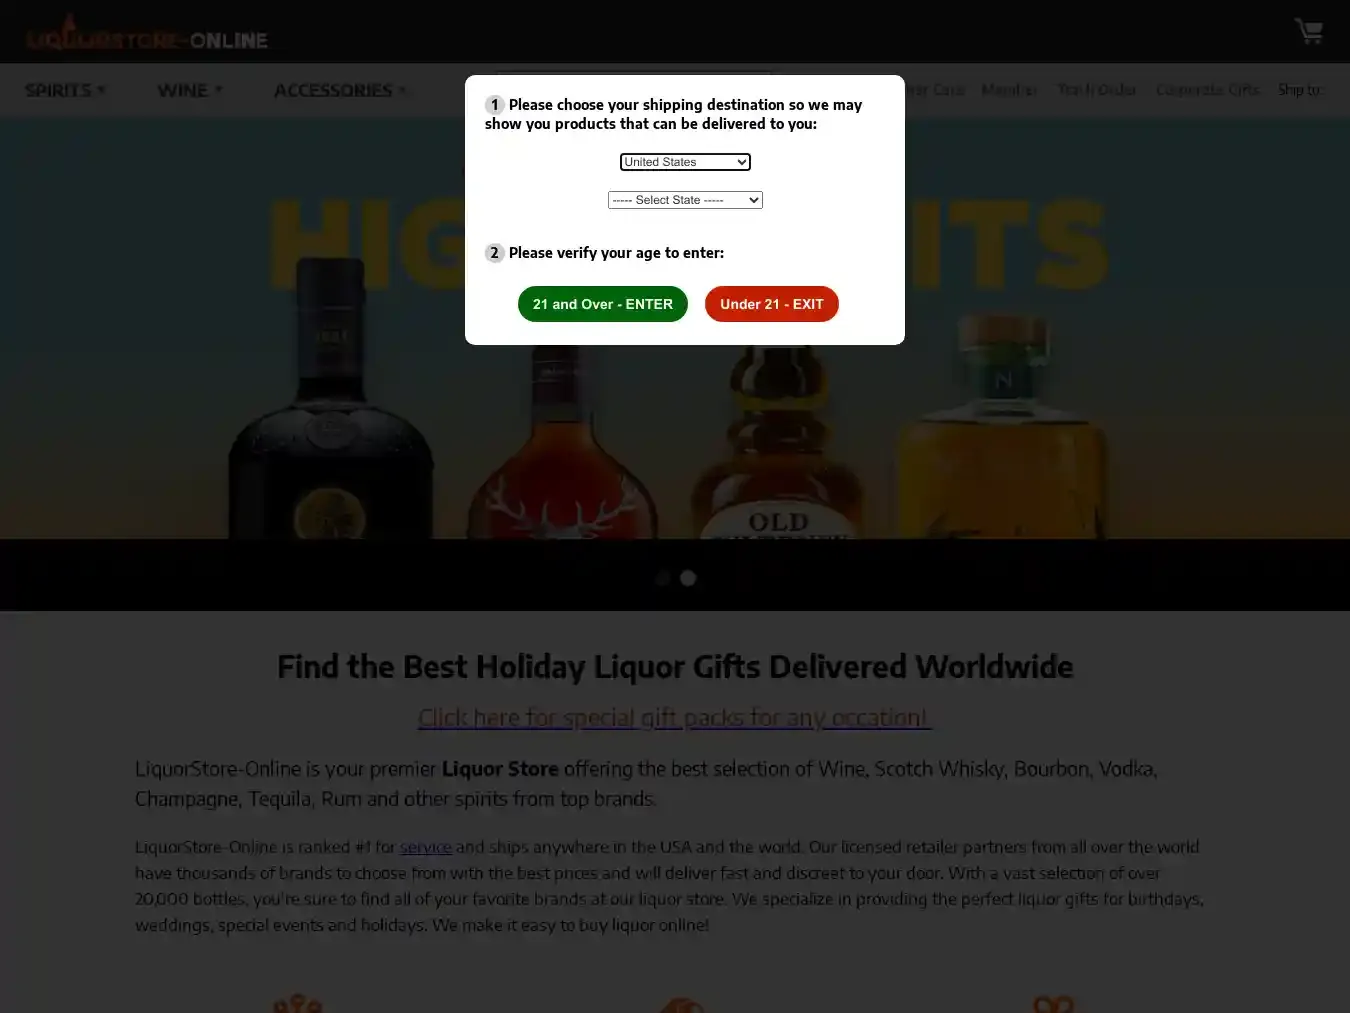 Liquorstore-online.com Fraudulent Whisky website.